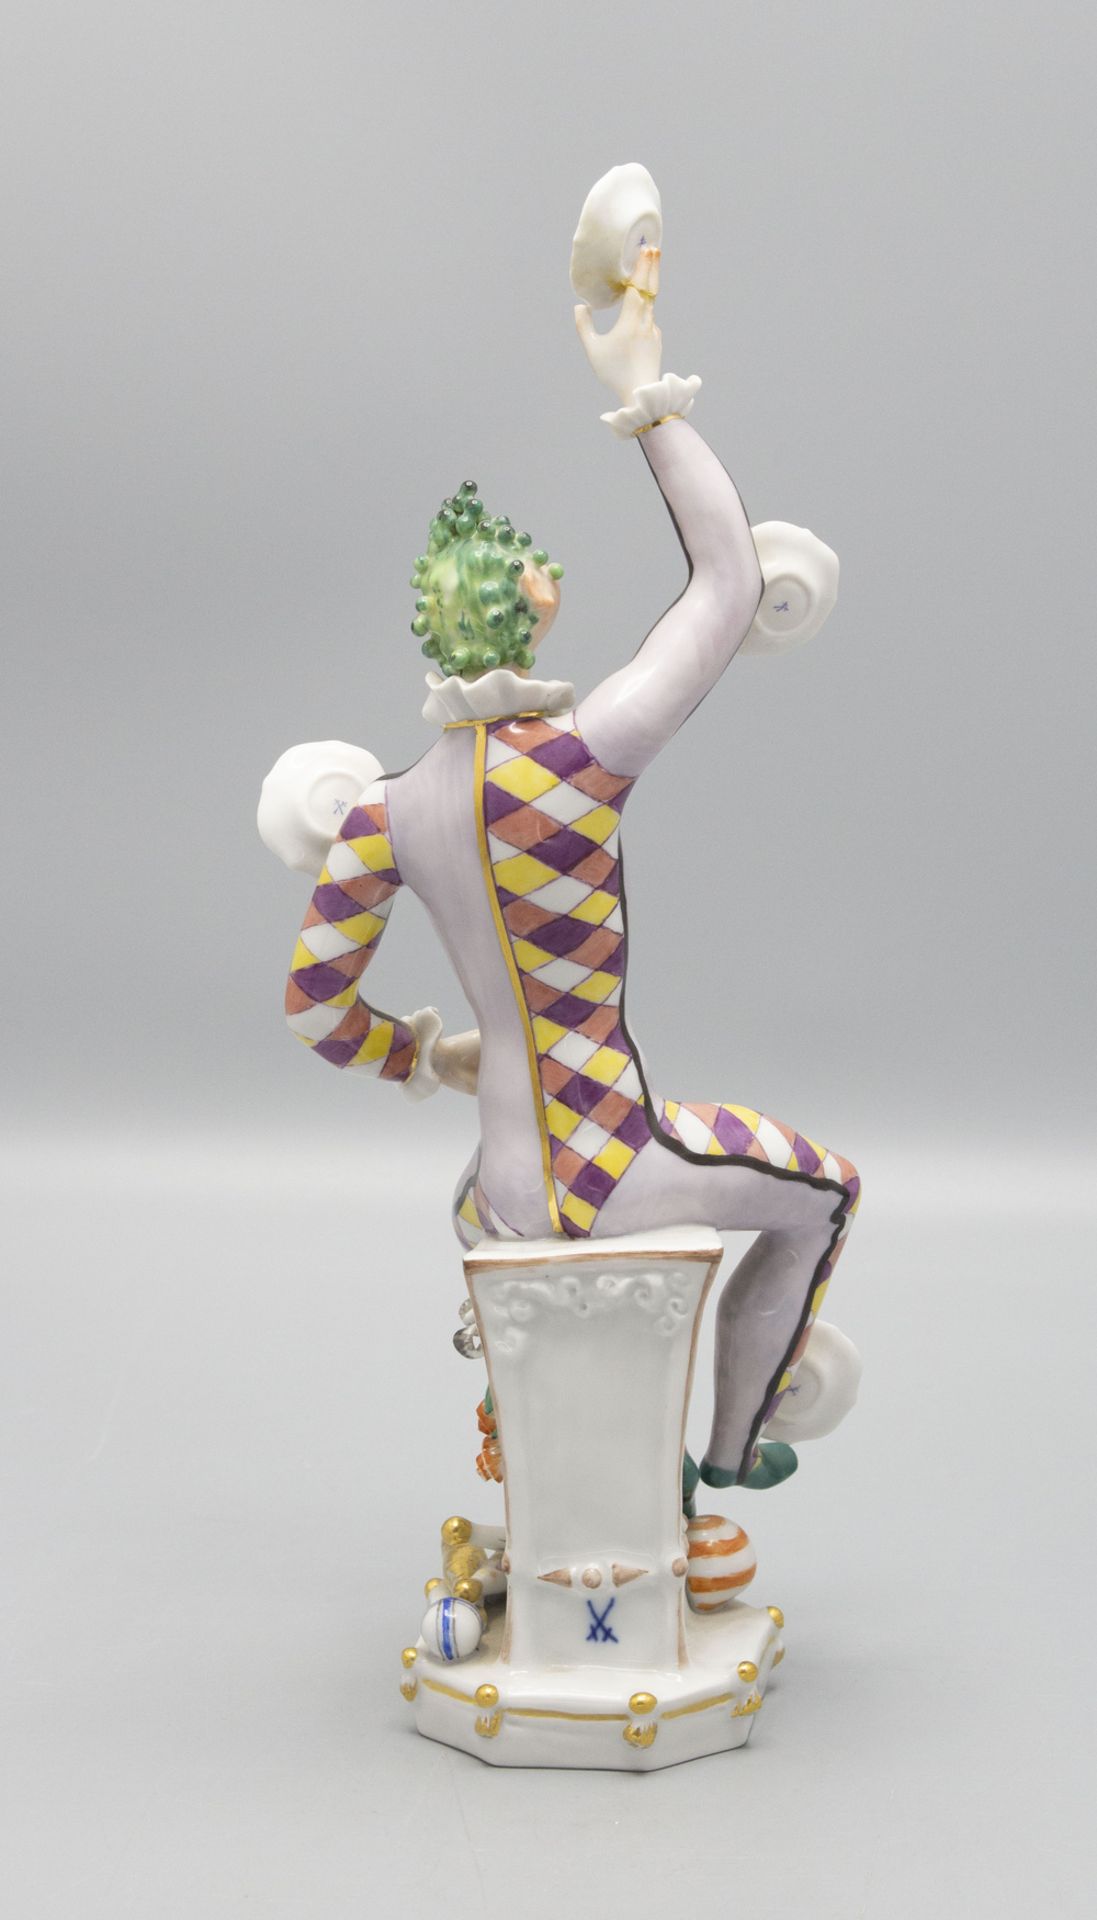 Porzellanfigur 'Der Jongleur' / A porcelain figurine 'The Juggler', Meissen, 1976 - Image 3 of 5